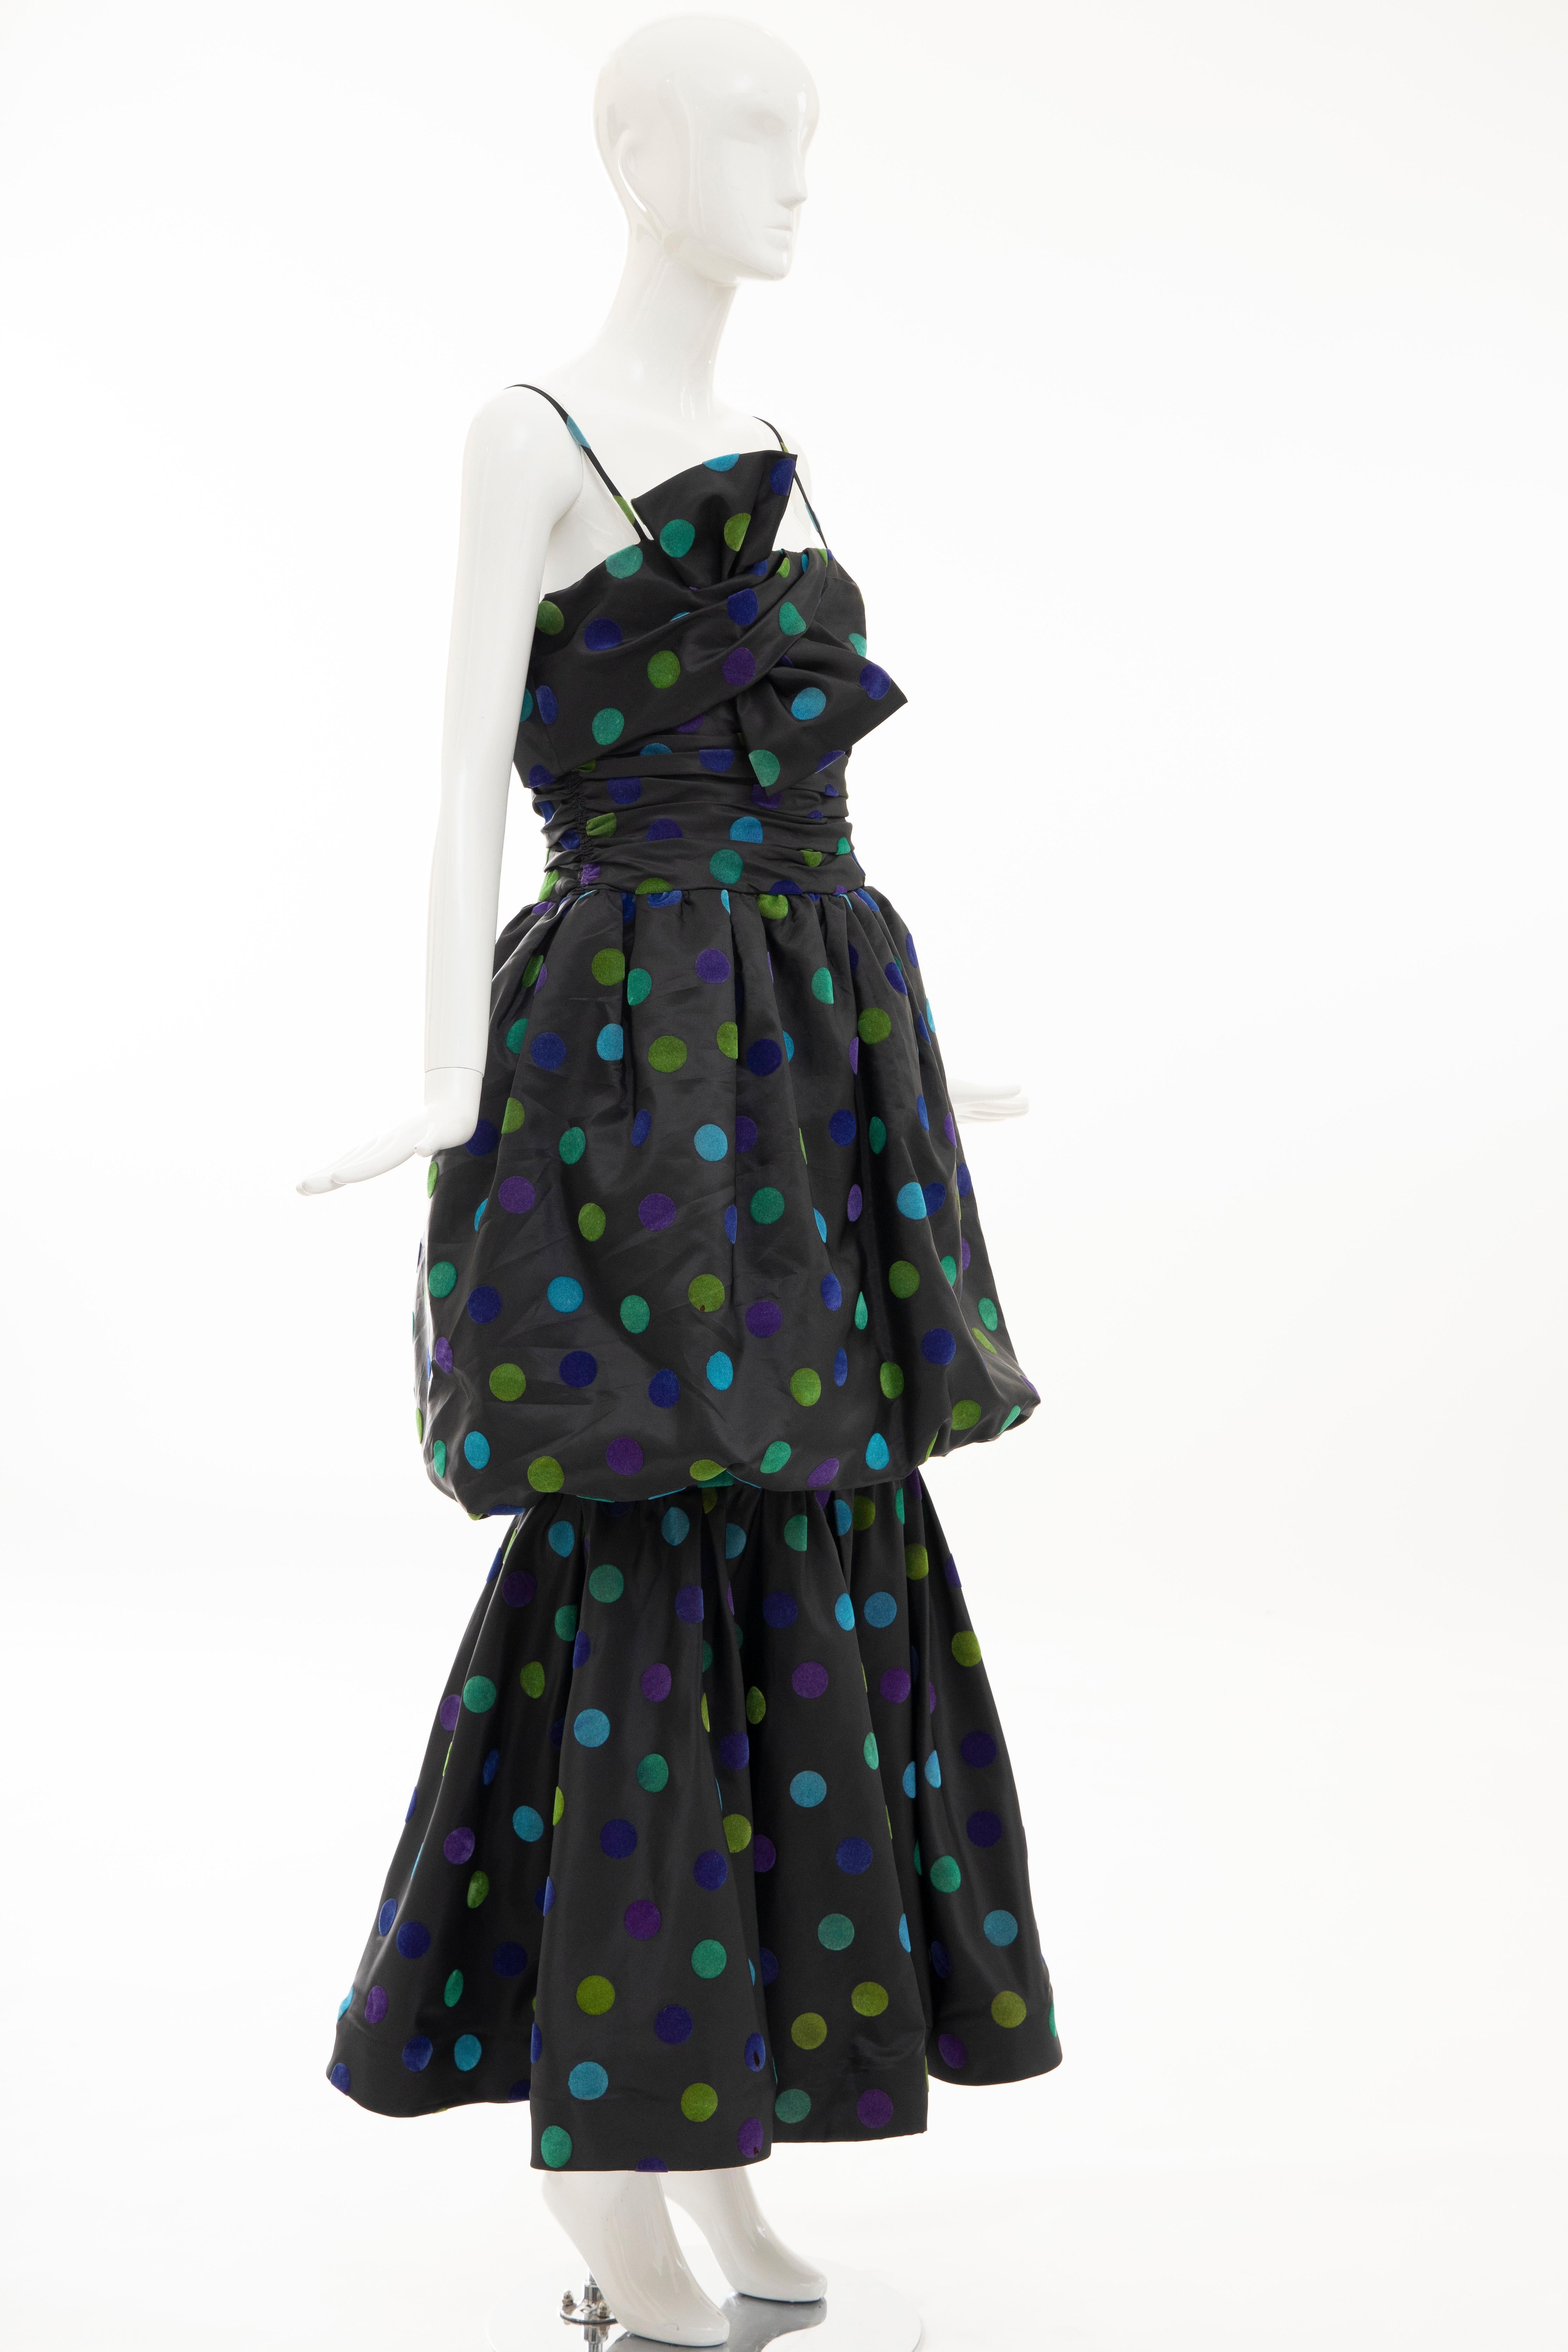 Nina Ricci Black Taffeta Velveteen Polka Dots Evening Dress, Circa: 1980s 1